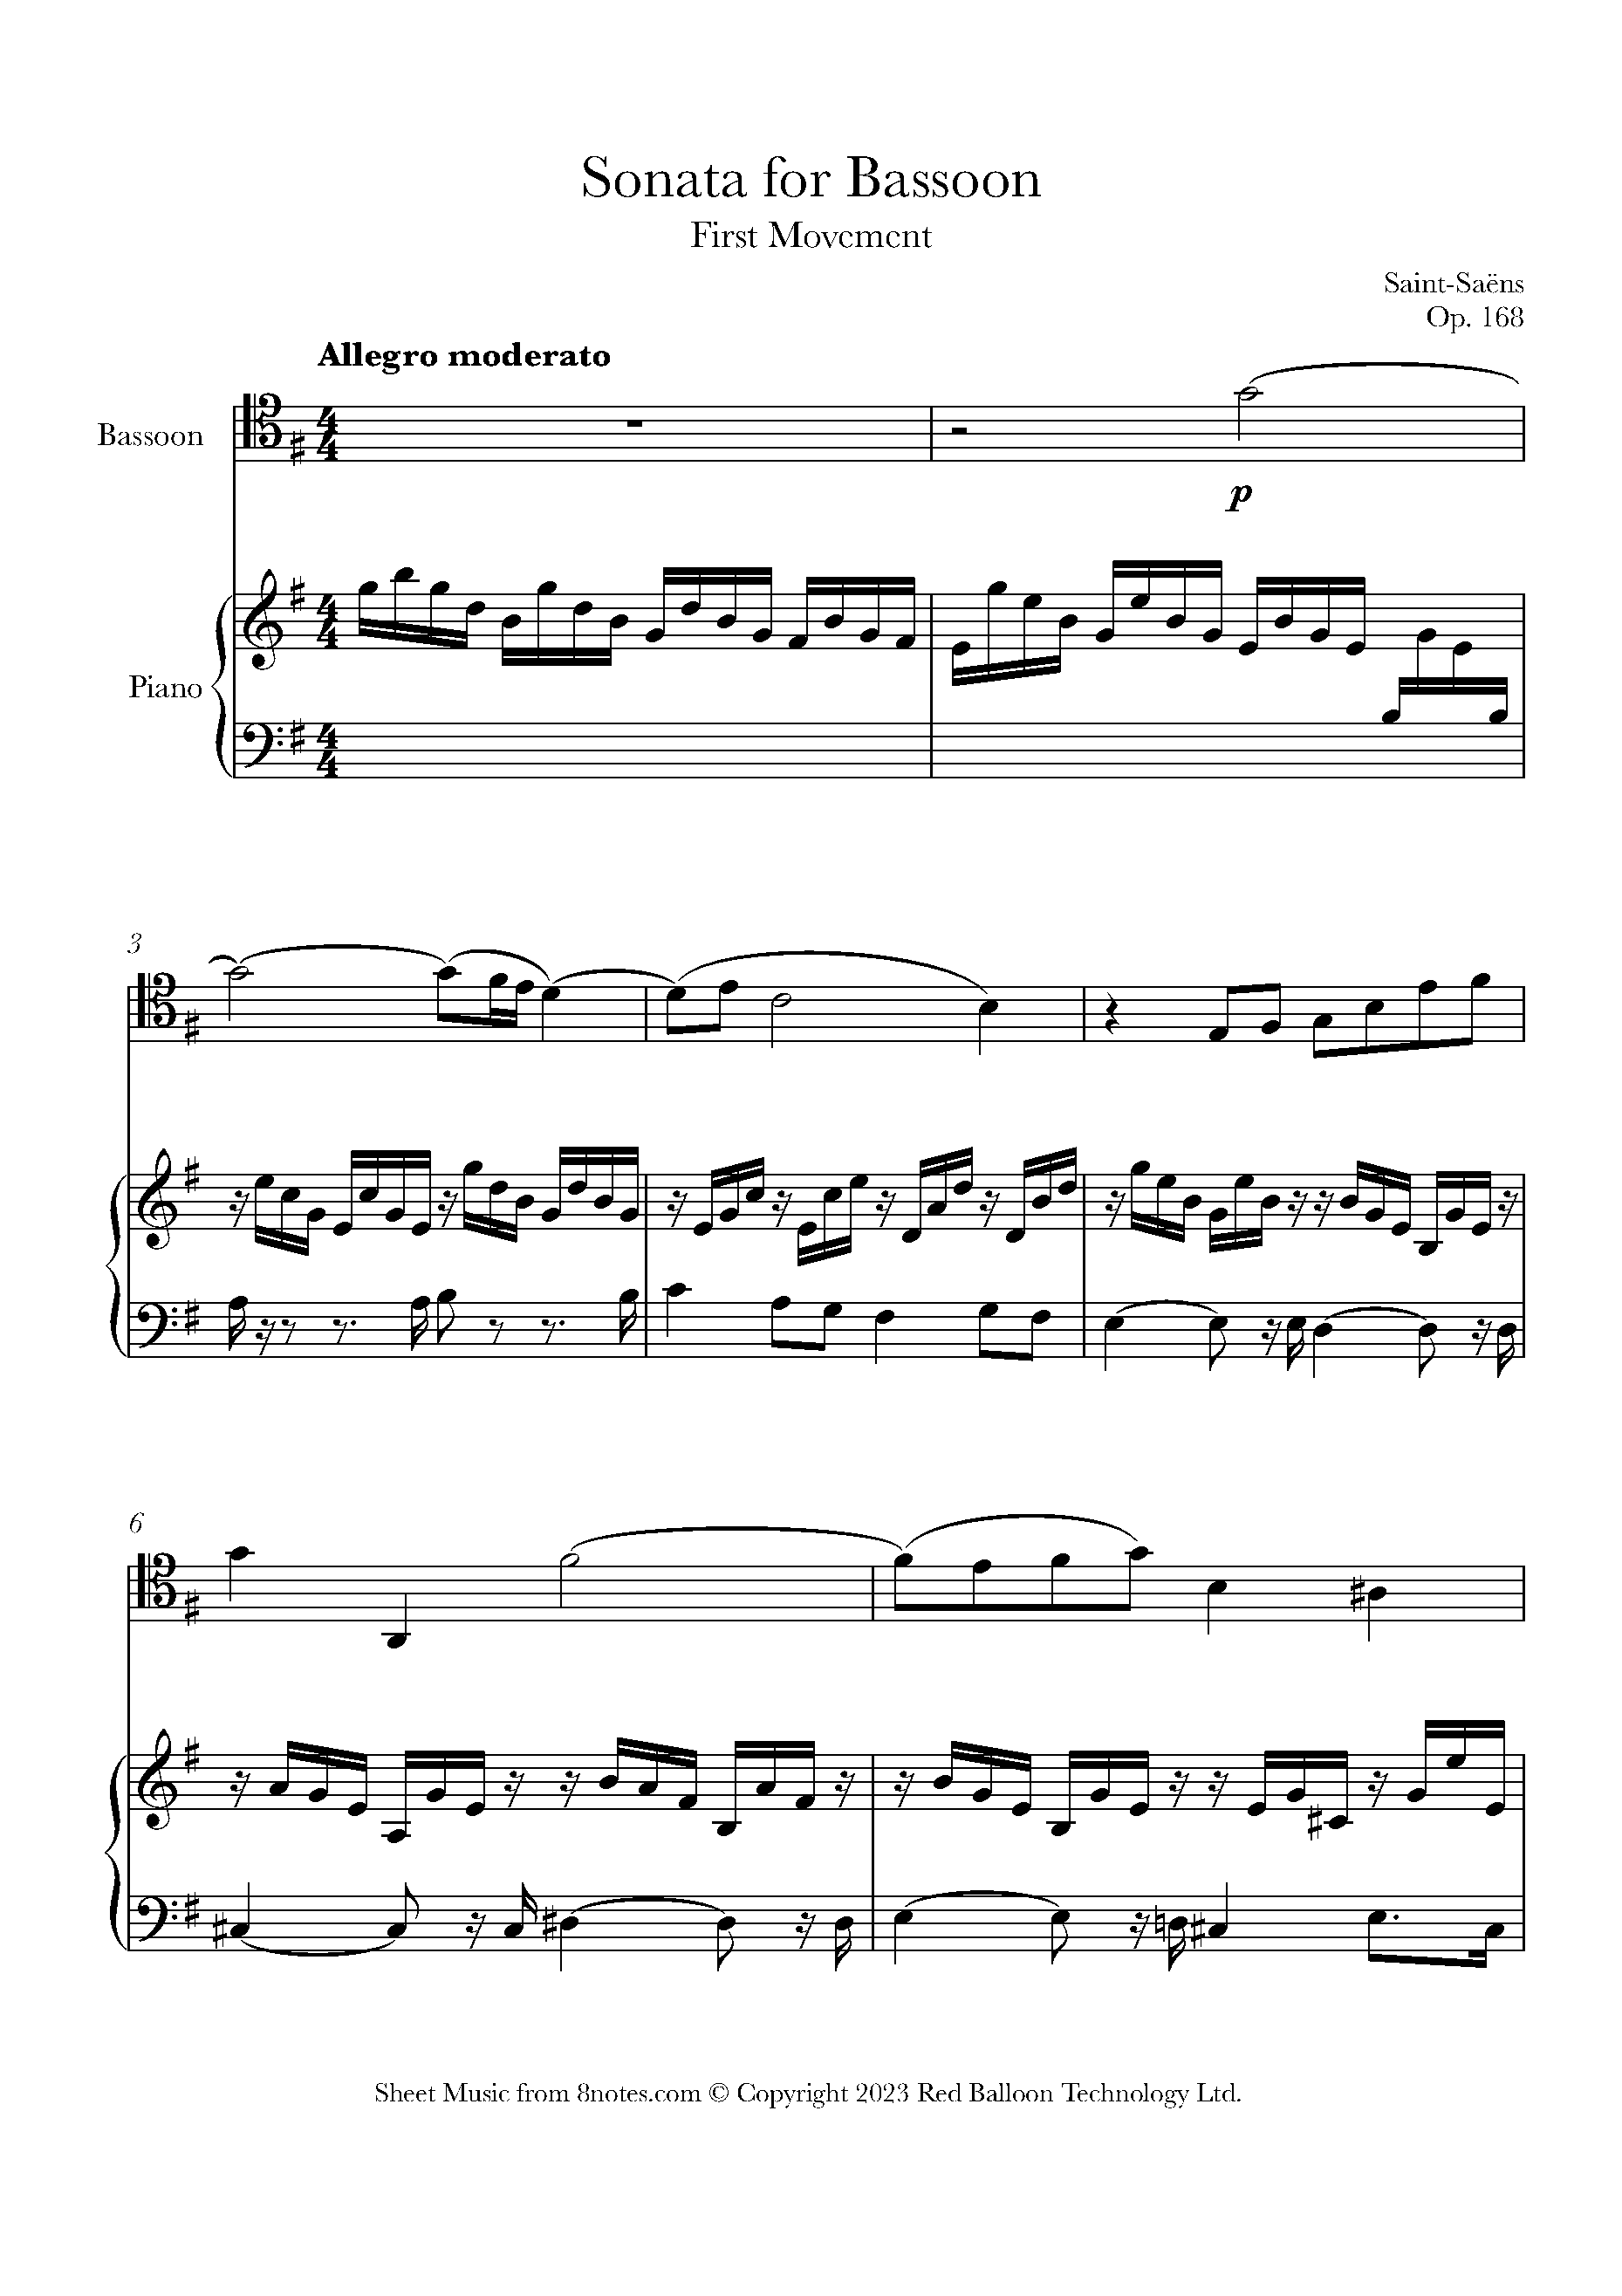 Saint-Saens  Sonata for Bassoon, Op. 168, ...